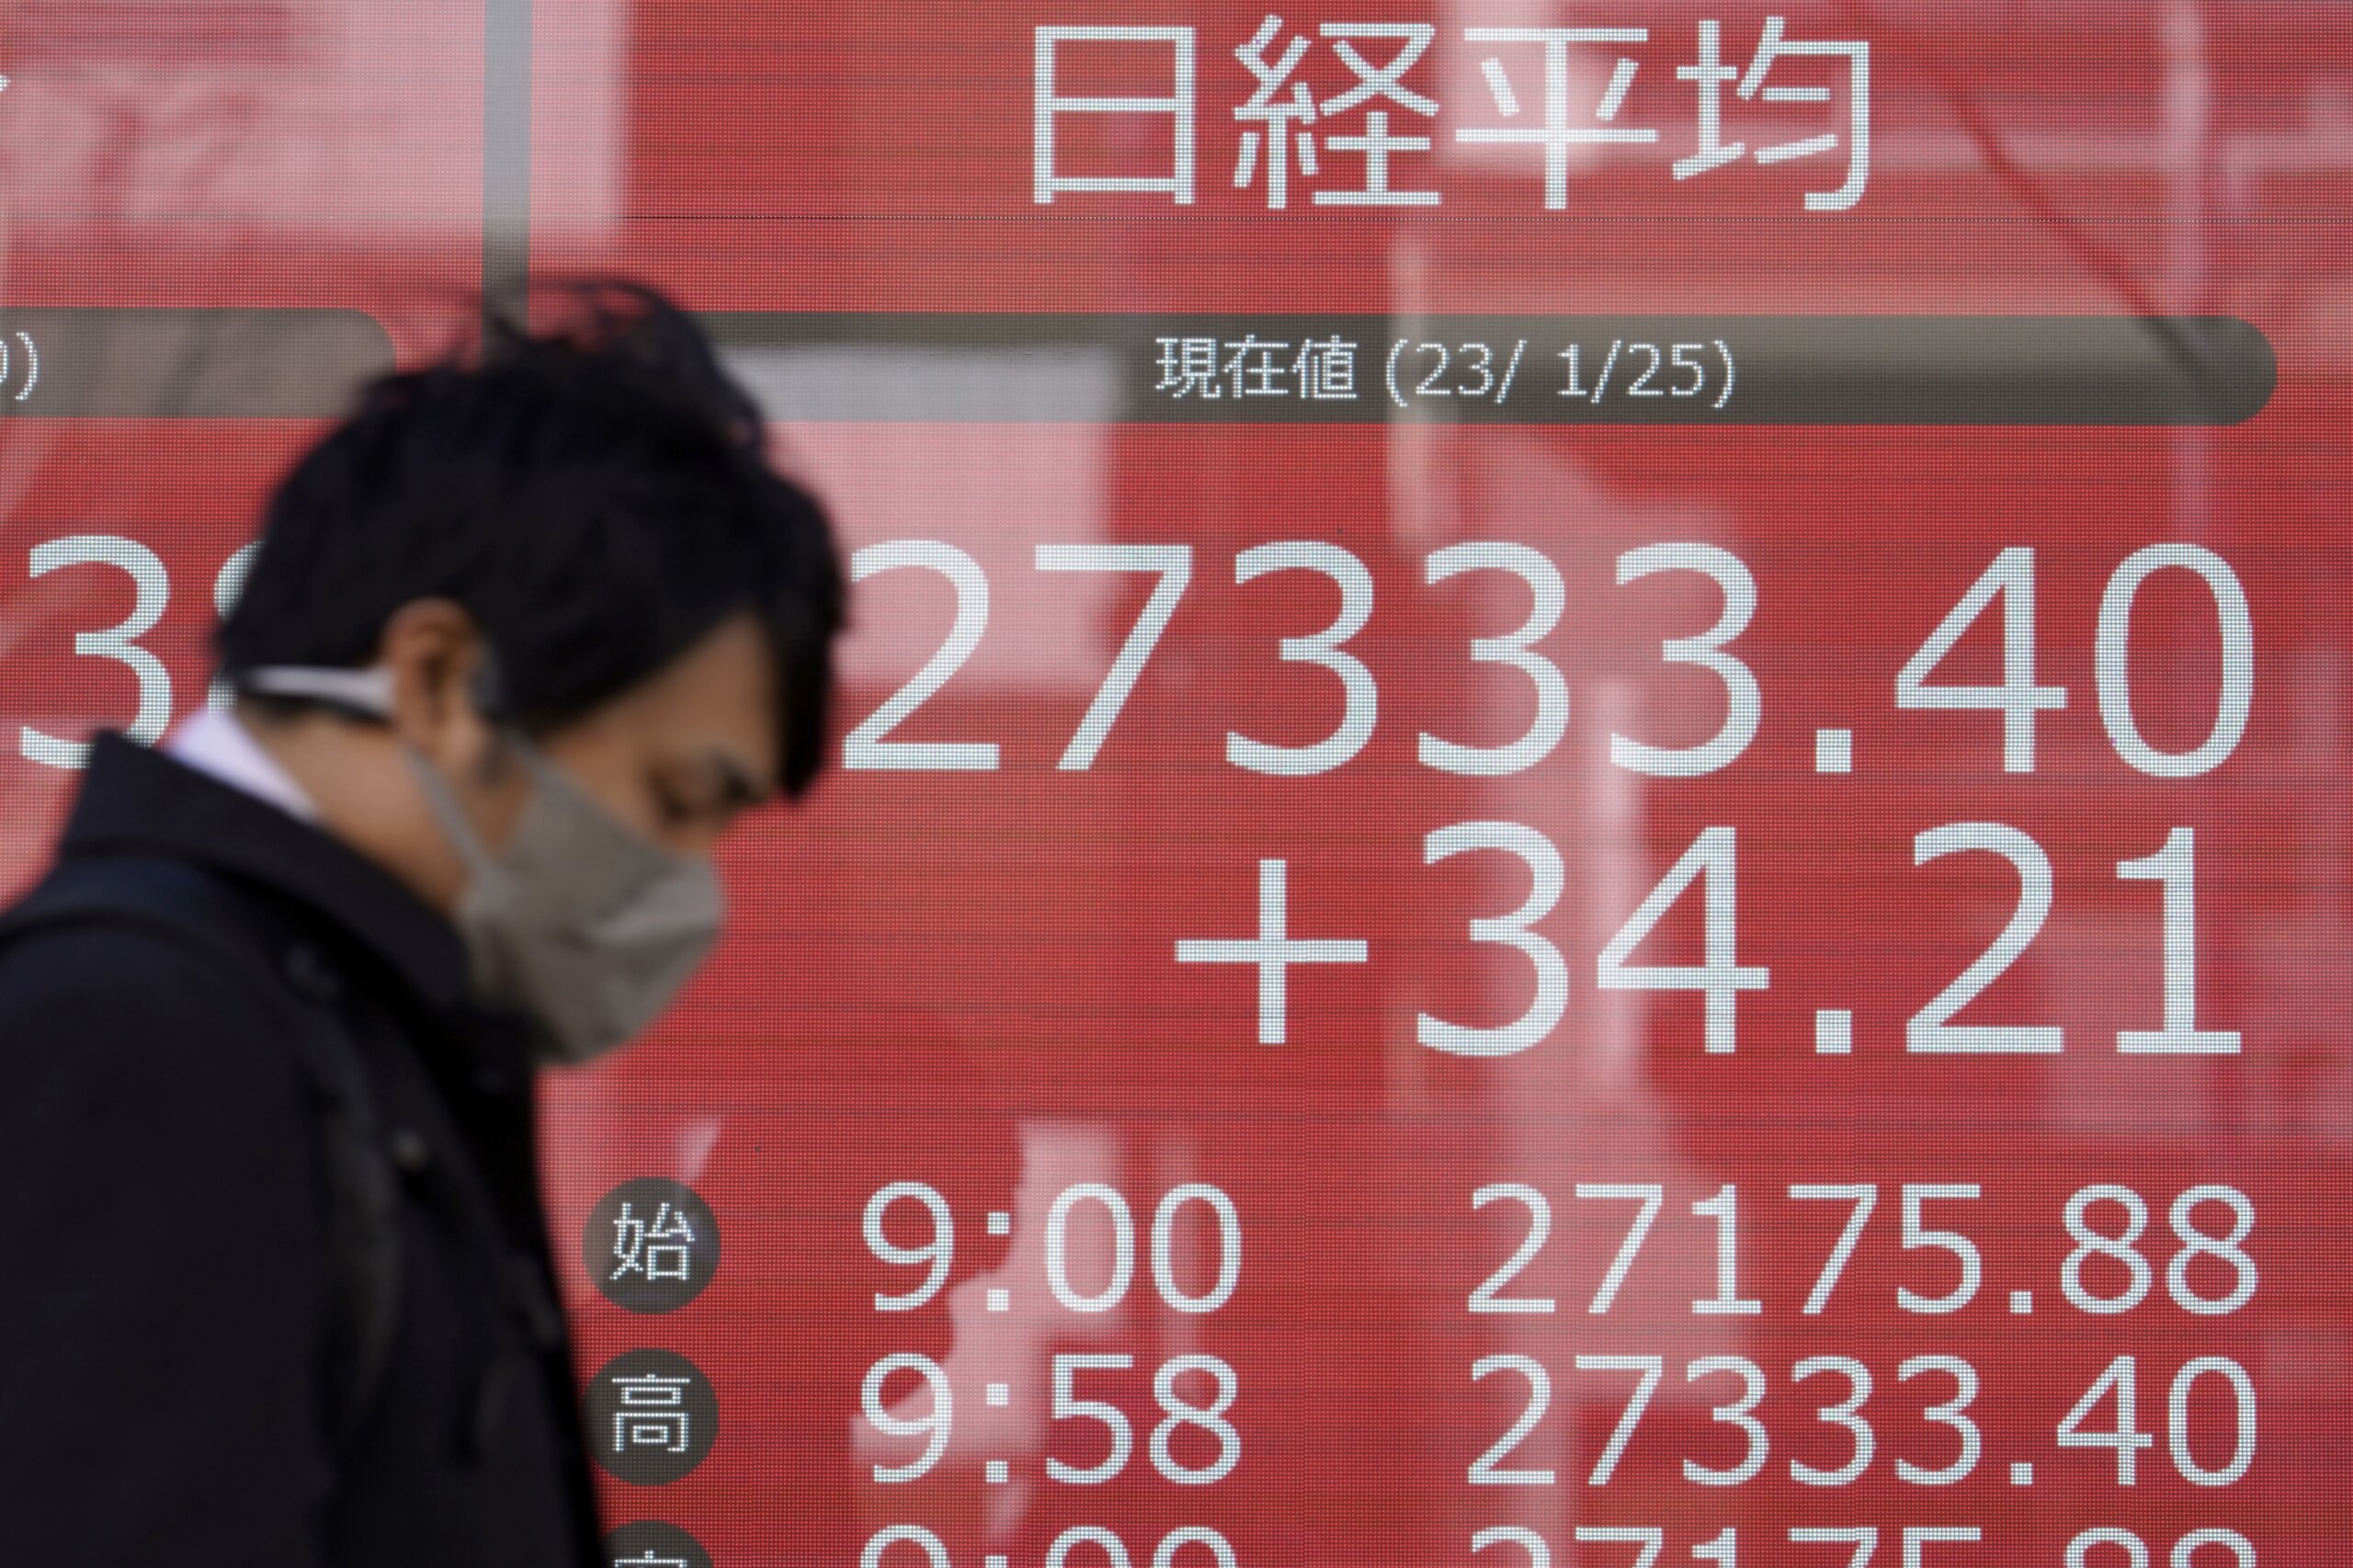 Asia shares trading mixed, China markets closed for holidays